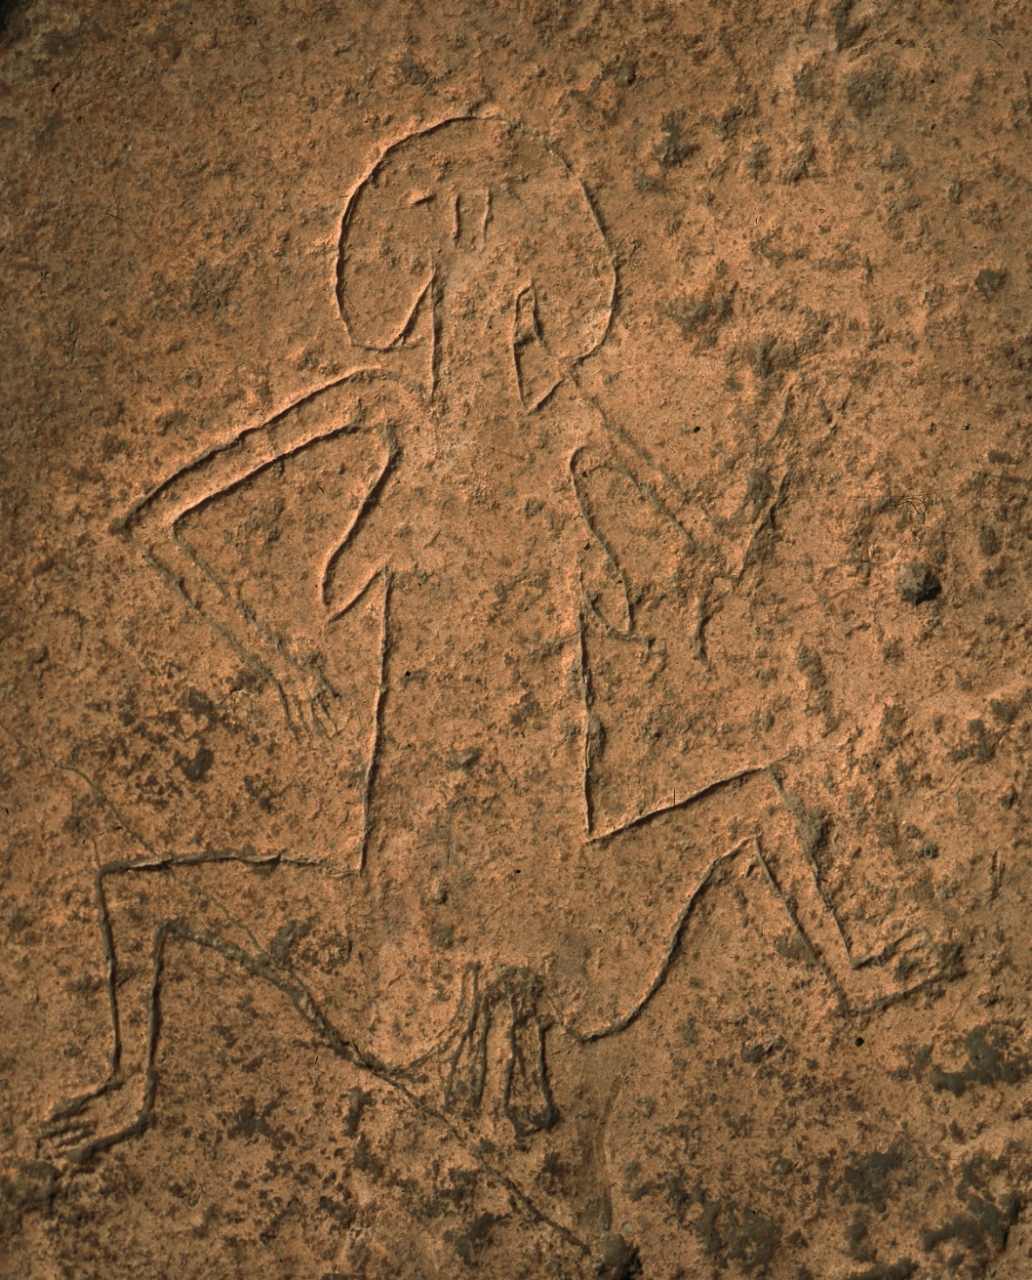 Was Göbekli Tepe built by Aboriginal Australians? 7